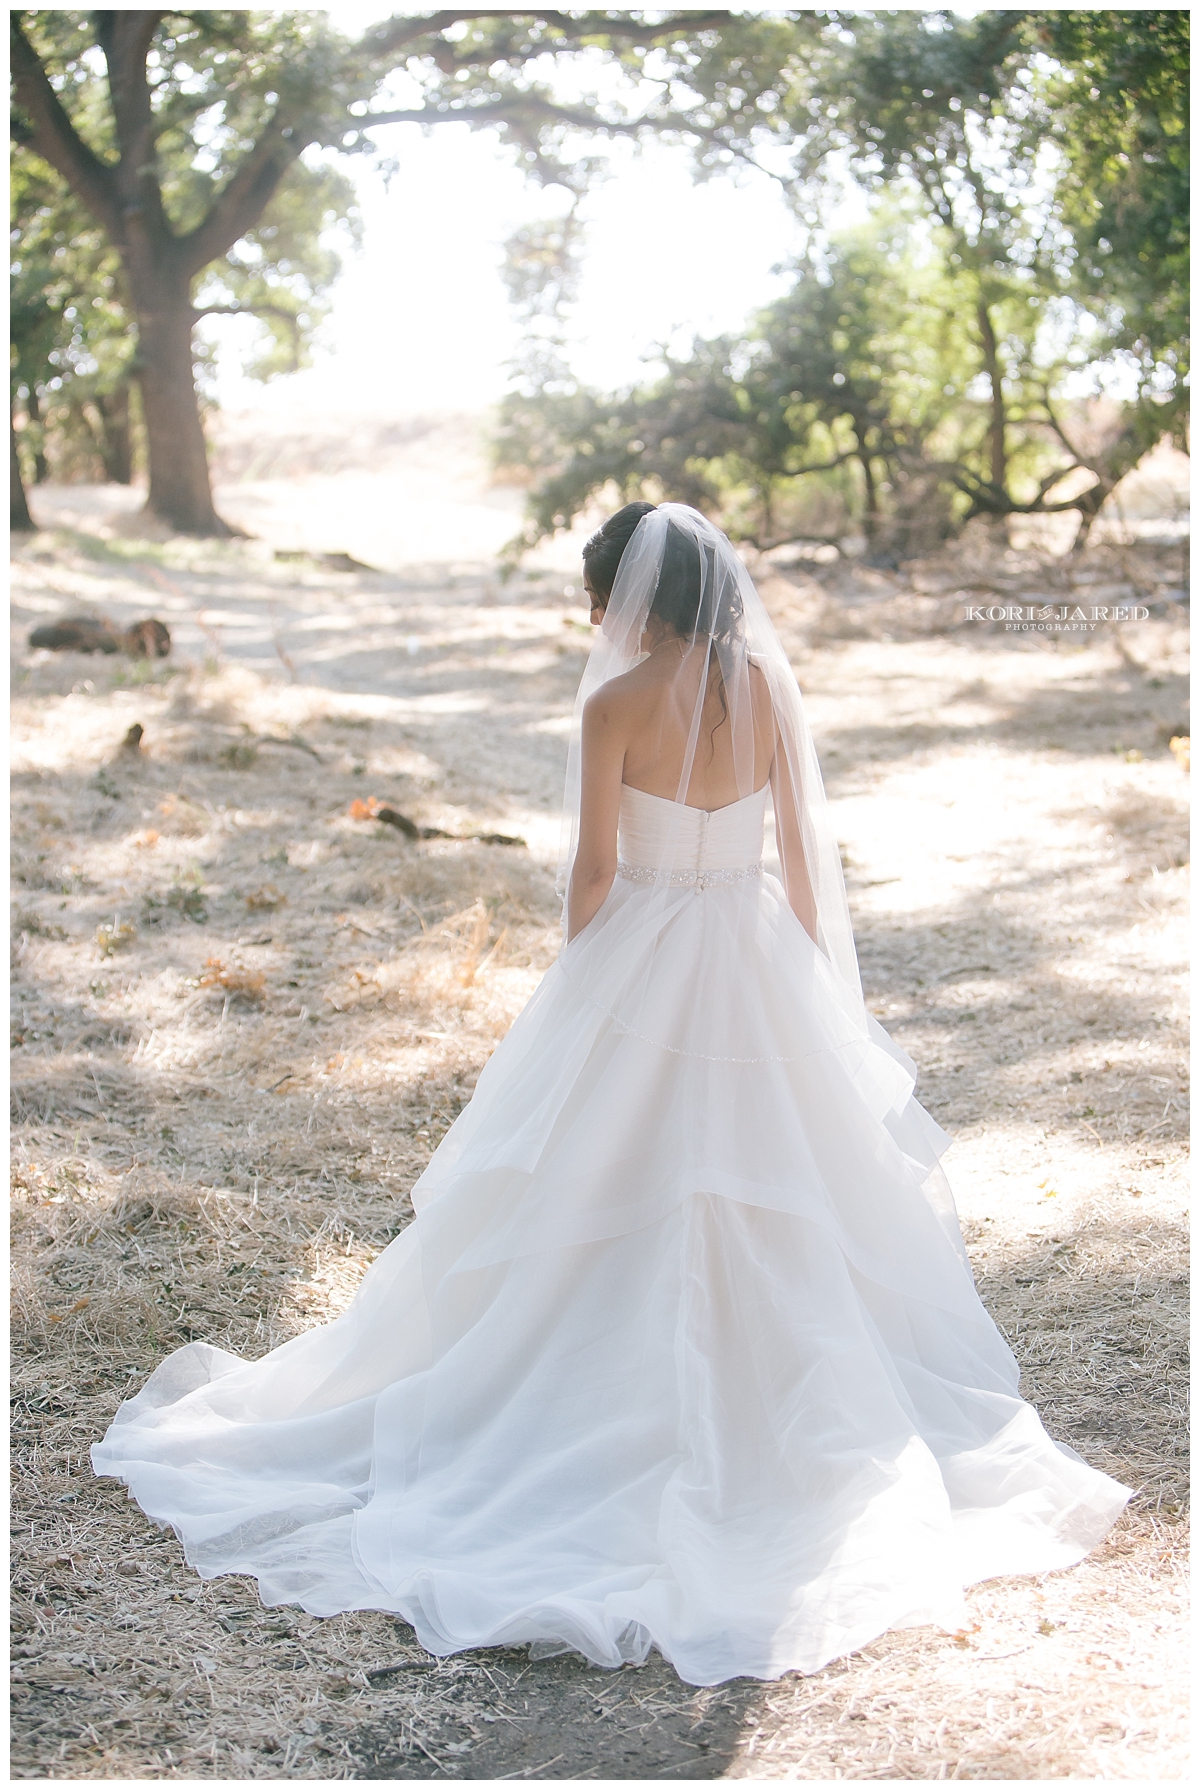 Brad + Danielle (Ripon, CA – Wedding) | Kori and Jared Photography Blog